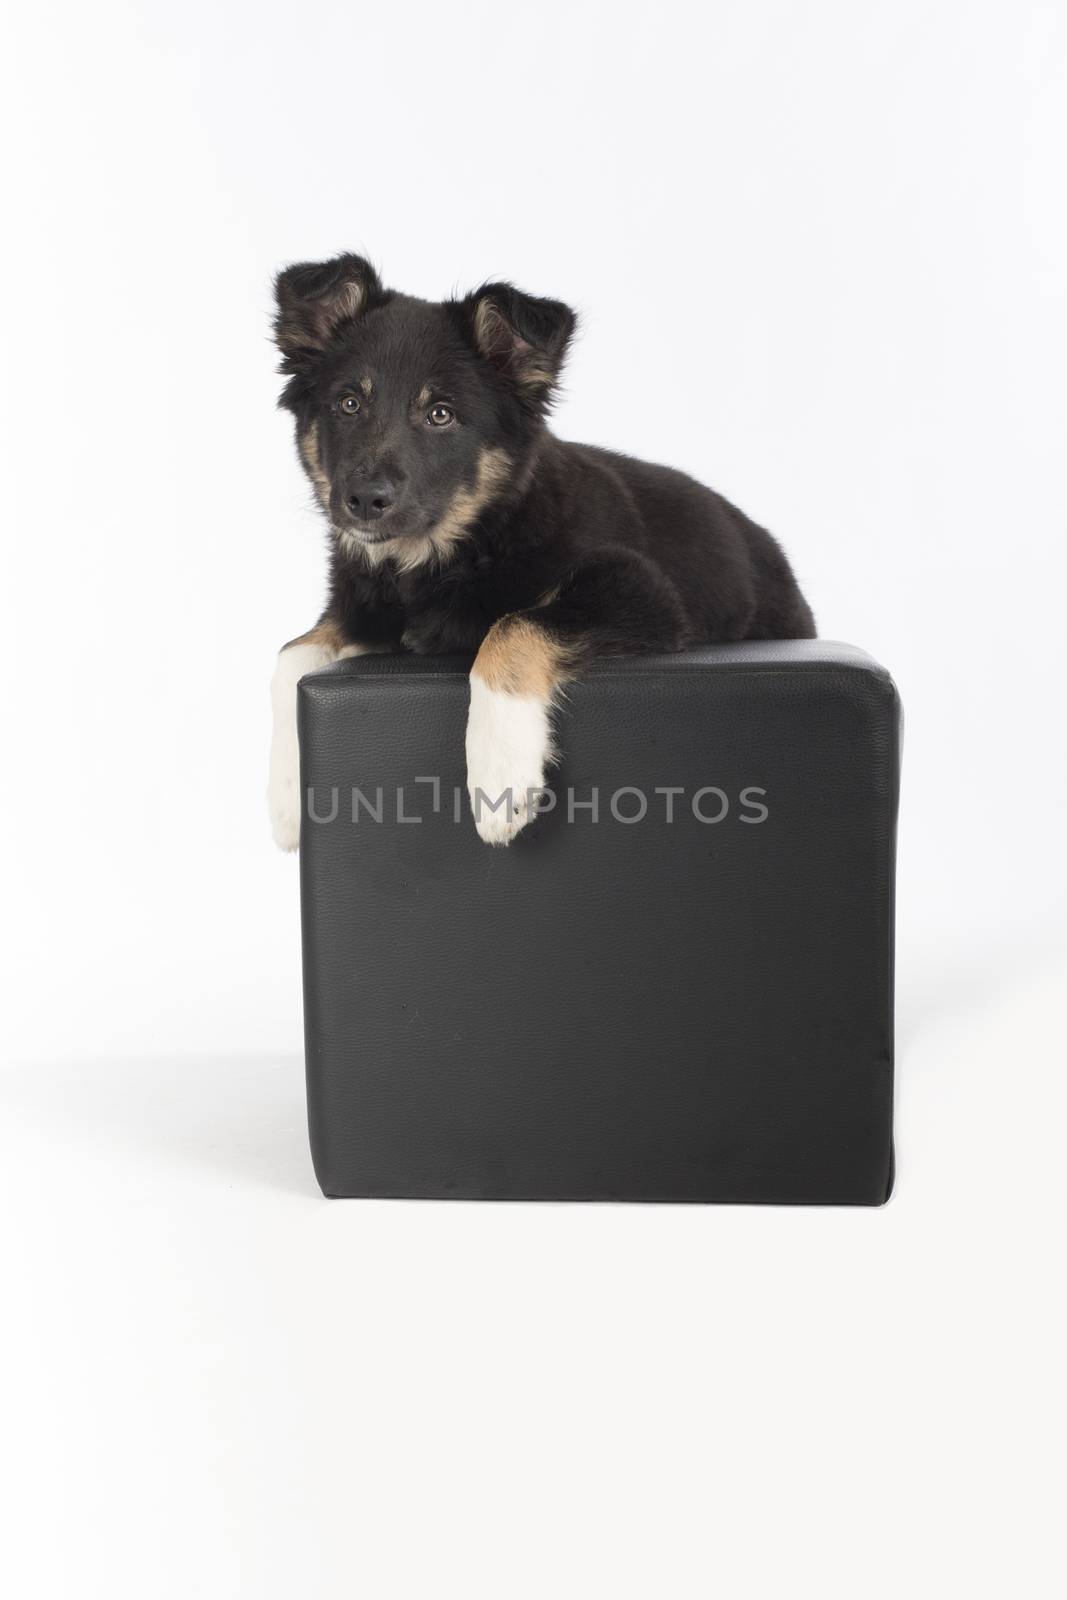 Puppy dog, Border Collie, hanging on a pouf, white background by avanheertum